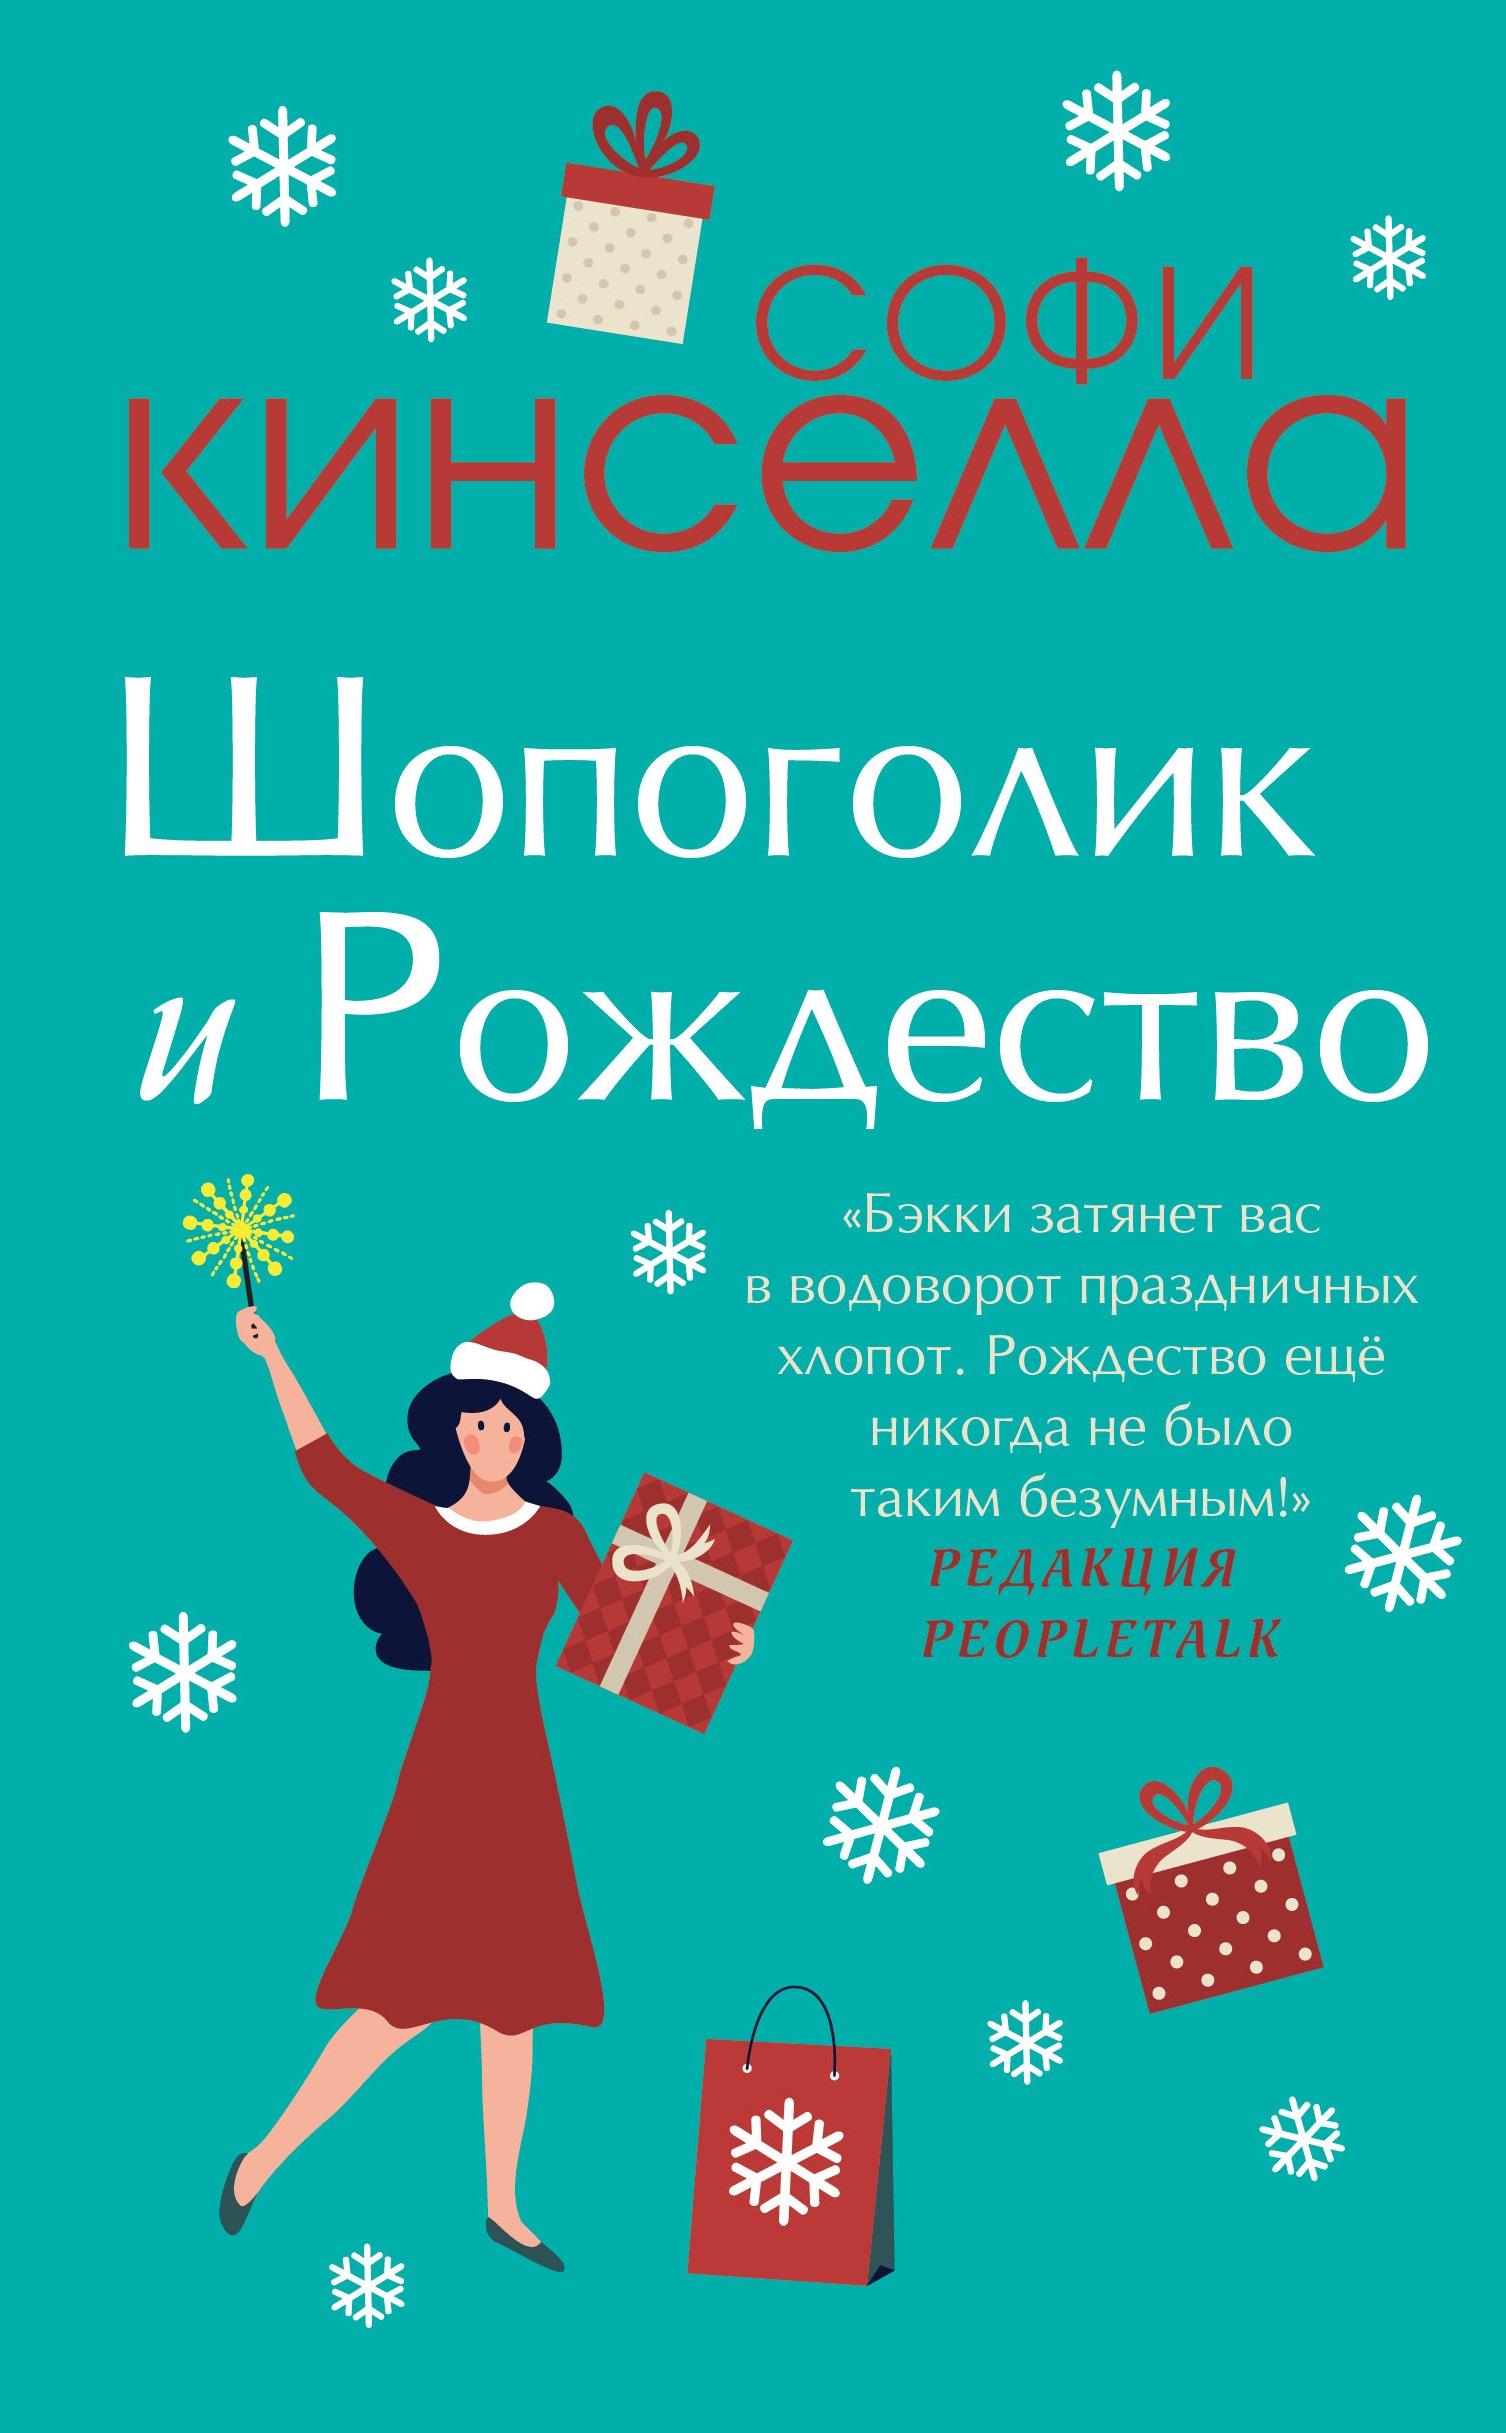 Christmas Shopaholic Russian